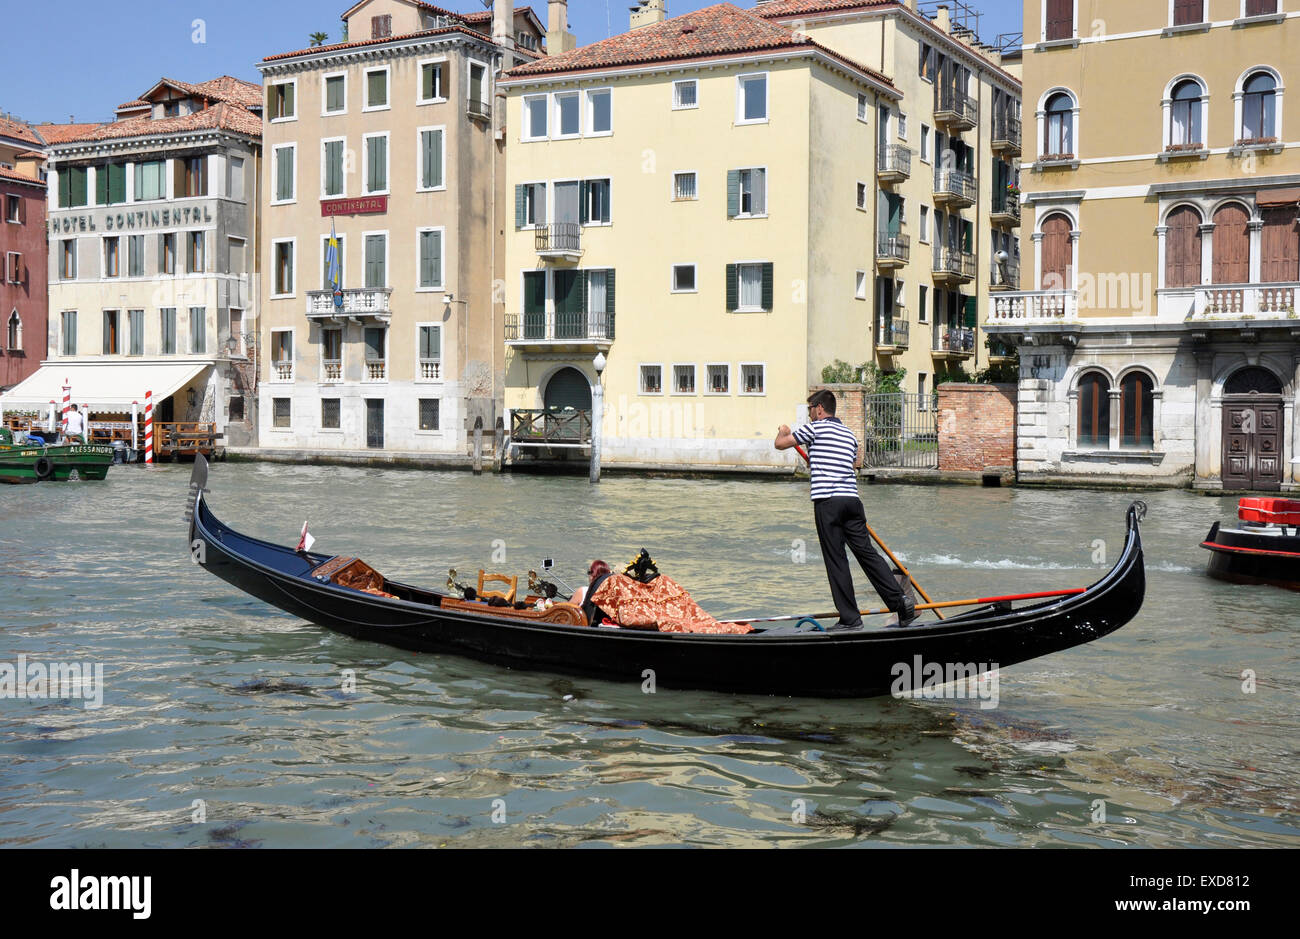 Italy Venice Cannaregio area - on Canale Grande- traditional gondola - gondolier - tourist couple taking selfies - sunlight Stock Photo